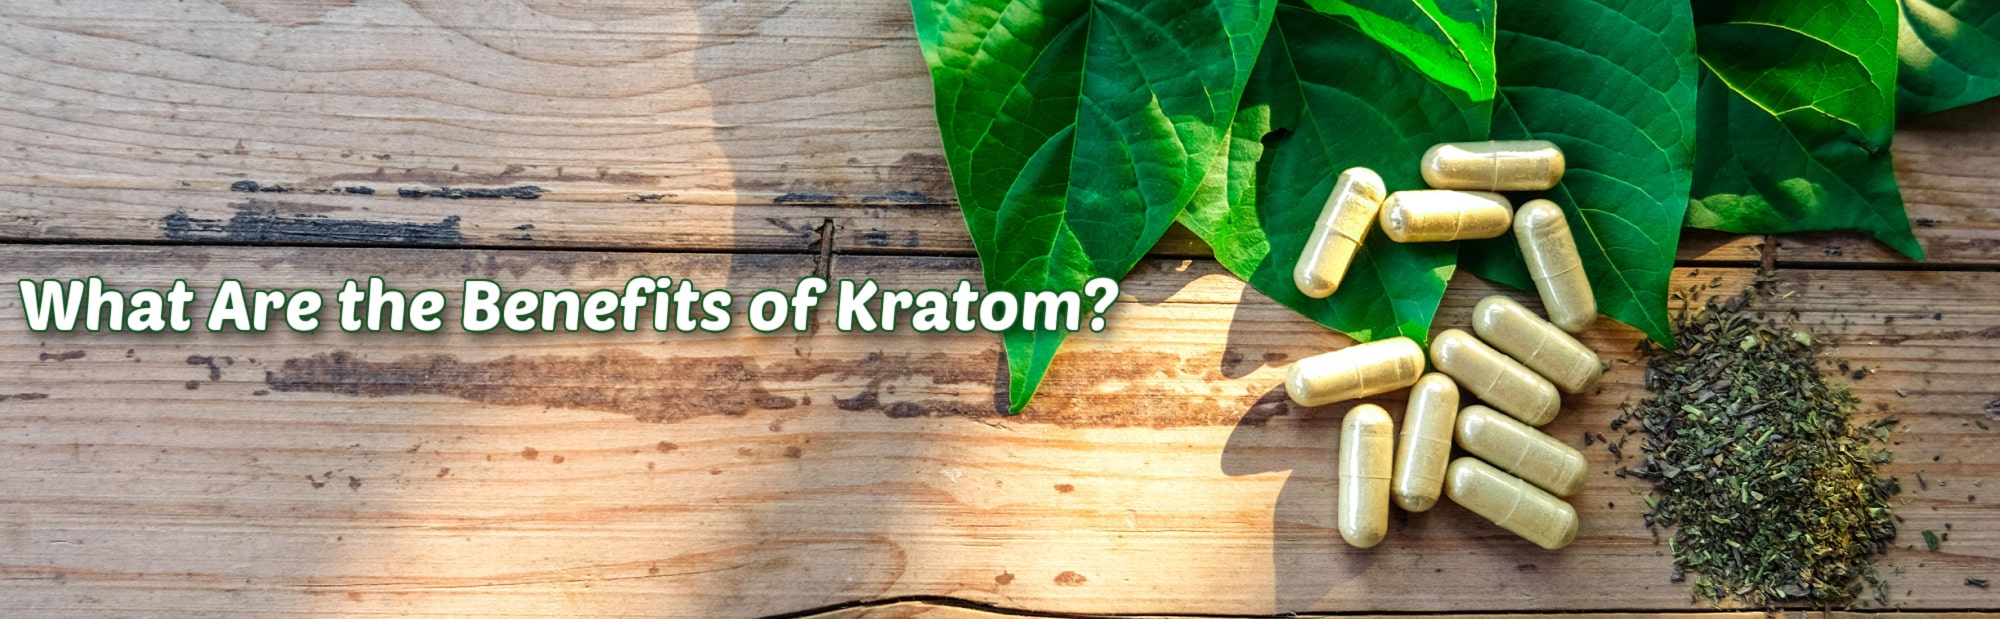 Here’s Where You Can Buy the Best Kratom in Boise, Idaho